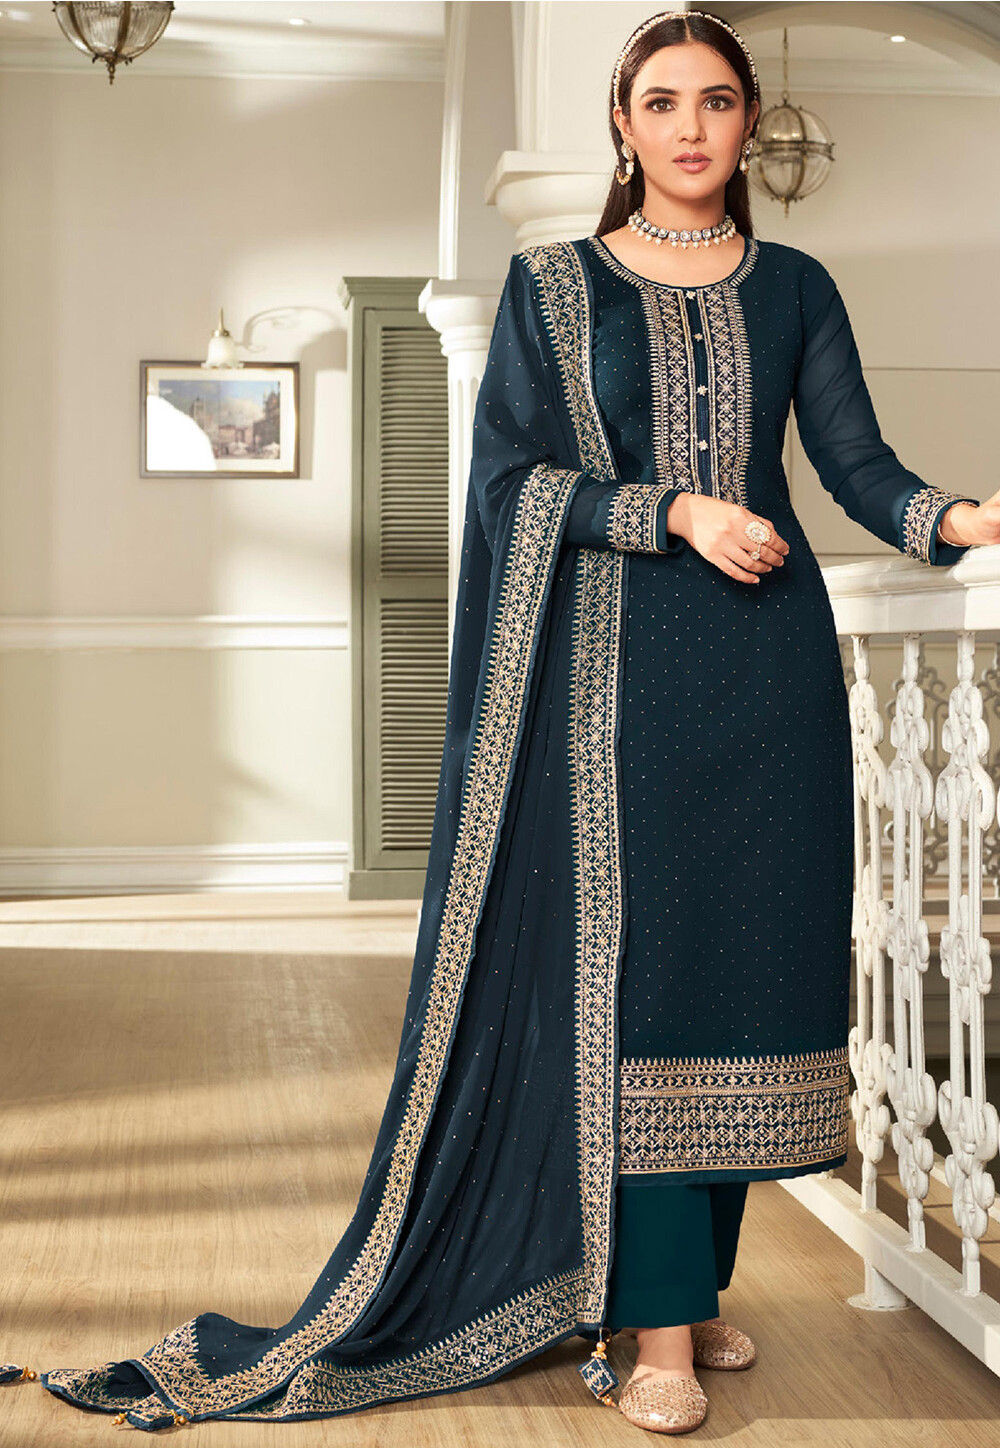 Buy Embroidered Georgette Pakistani Suit in Dark Teal Blue Online ...